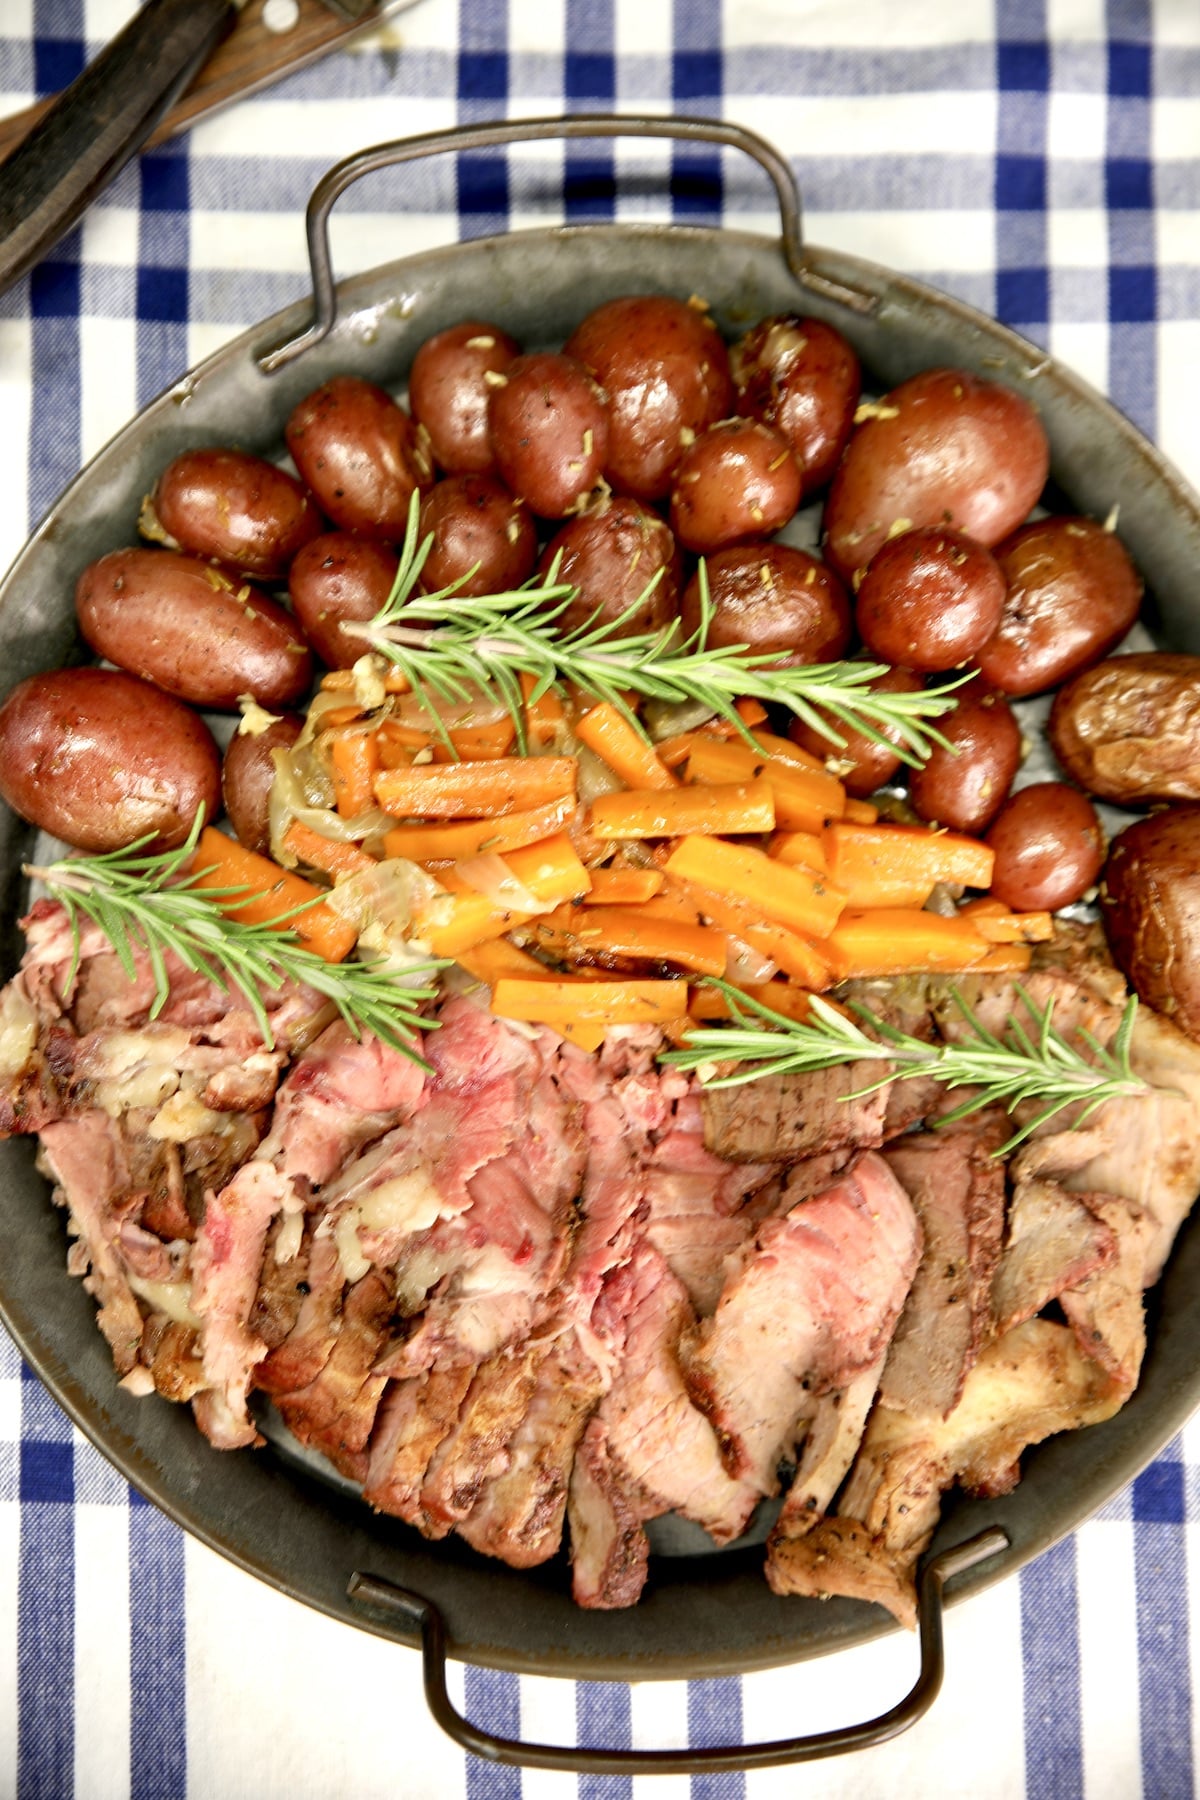 Platter of vegetables and sliced roast beef.